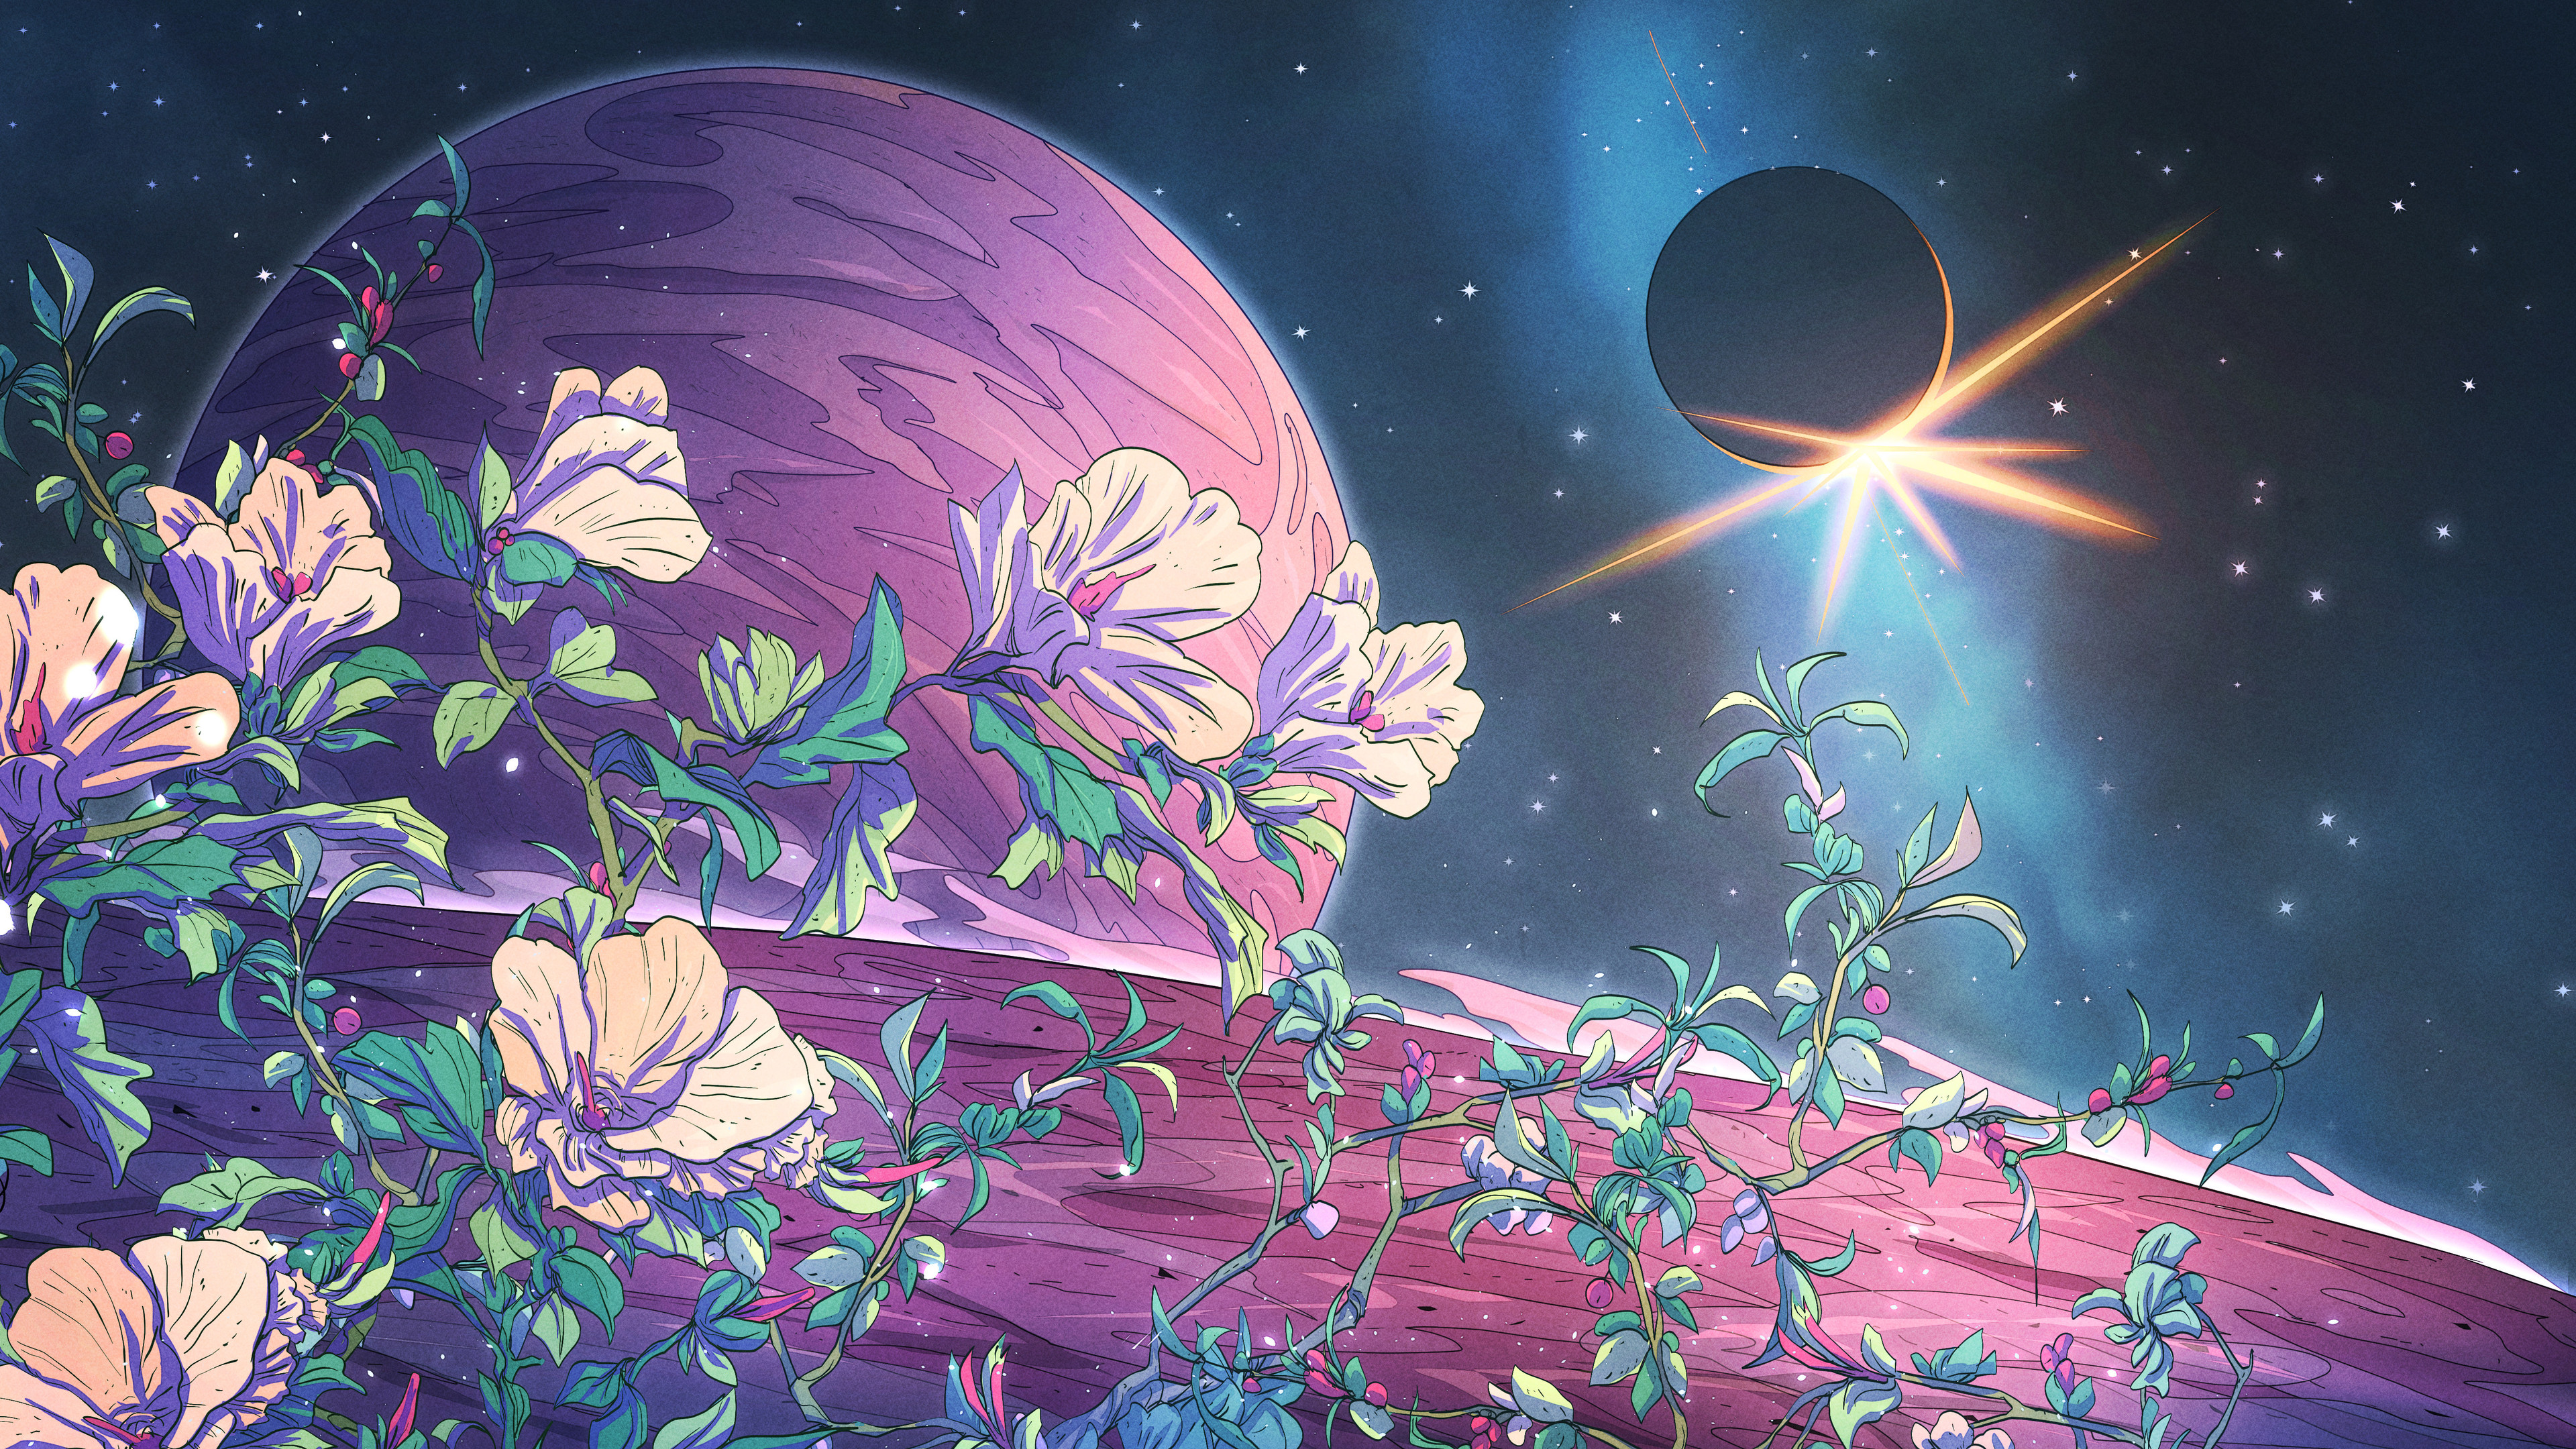 Christian Benavides Digital Art Fantasy Art Flowers Space Eclipse Planet Stars 3840x2160